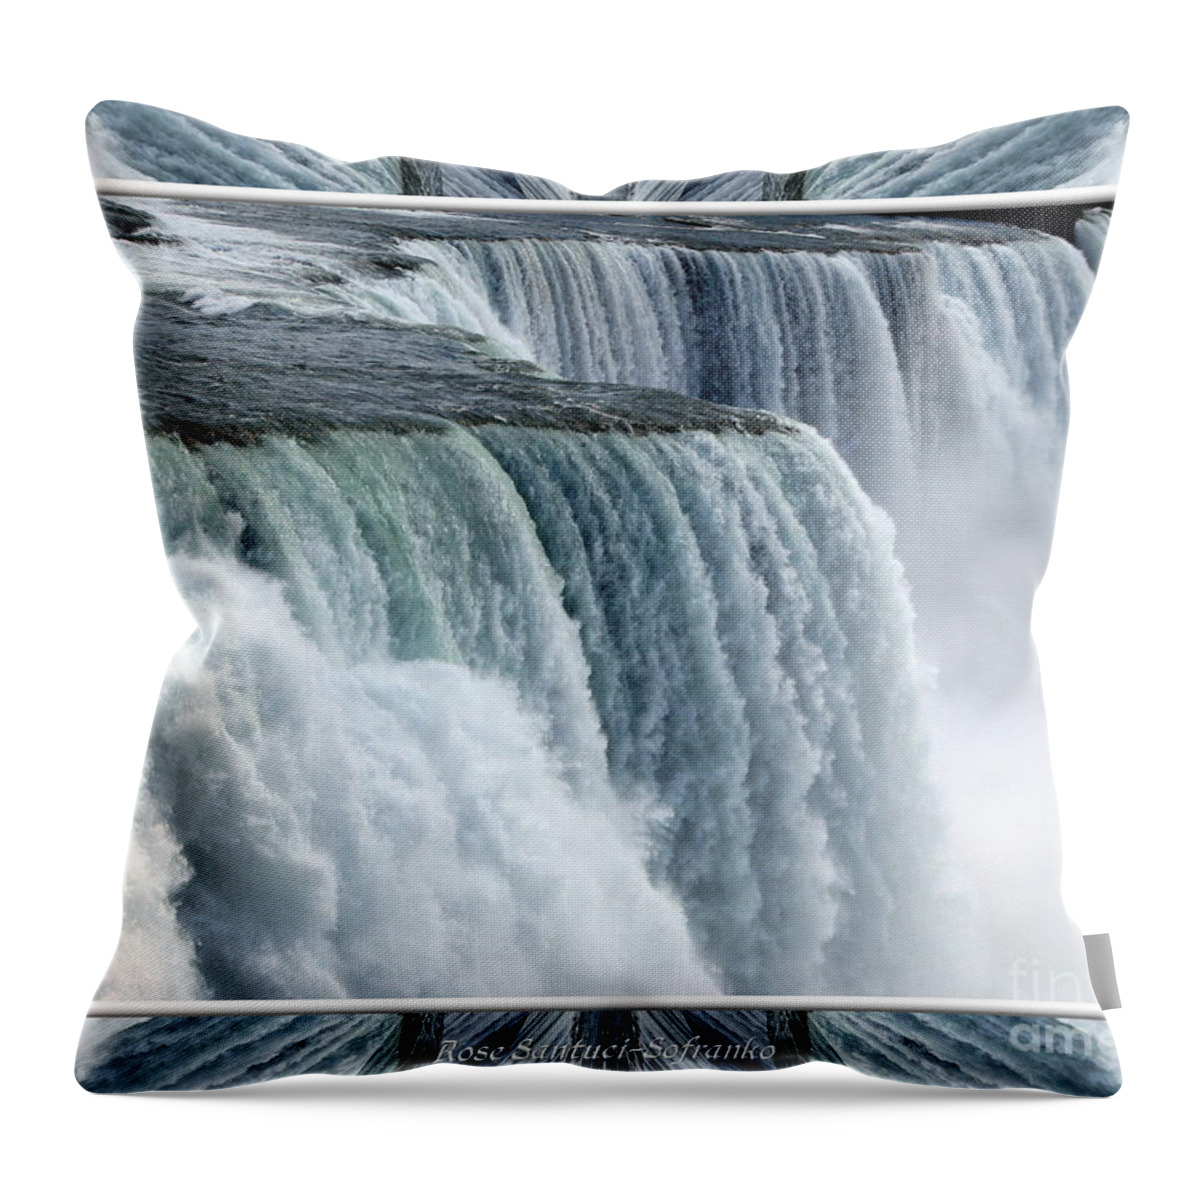 Niagara Falls Throw Pillow featuring the photograph Niagara Falls American side closeup with warp frame by Rose Santuci-Sofranko